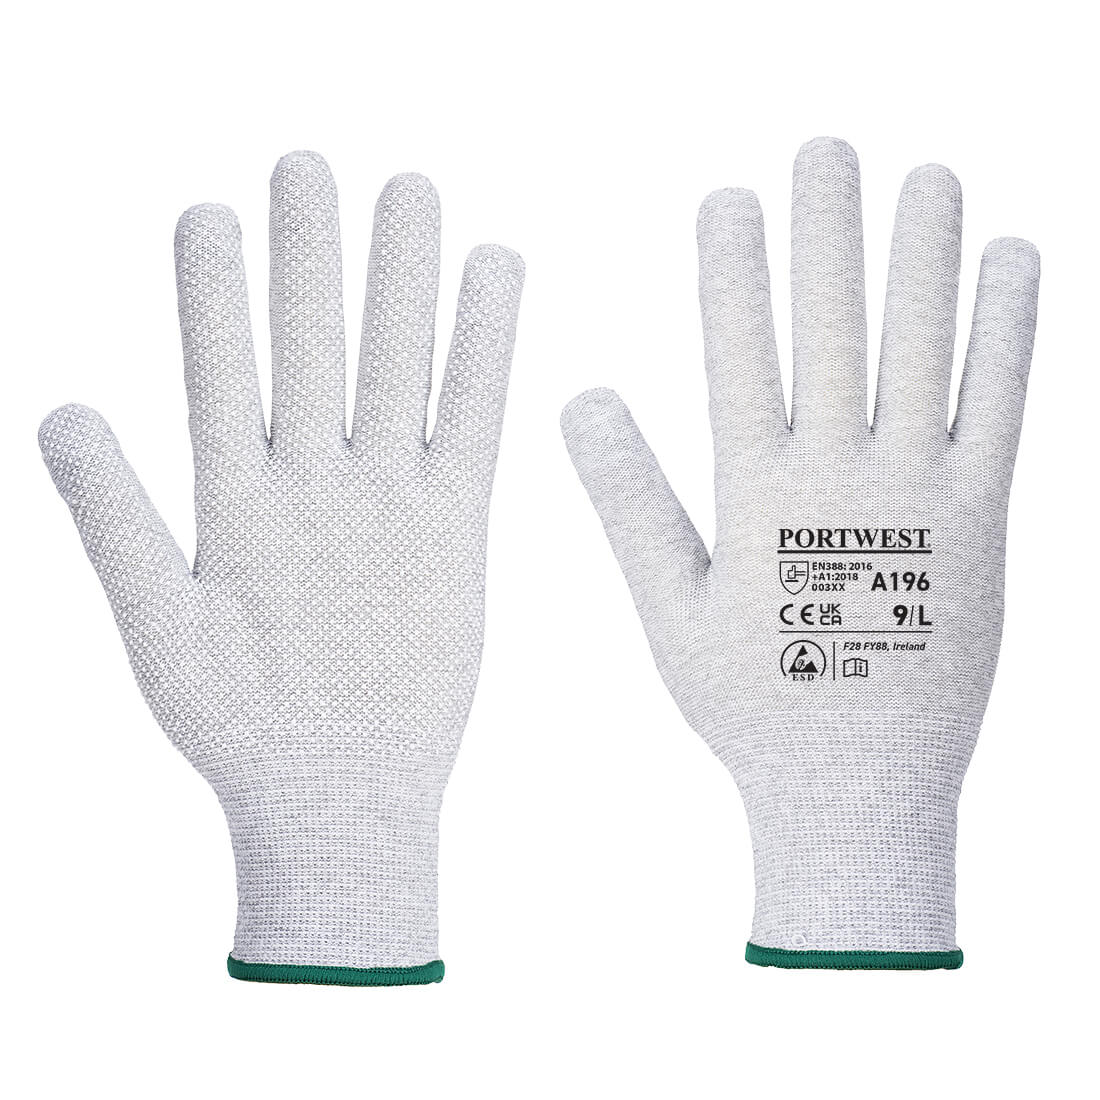 Antistatic Micro Dot Glove - Grey/White